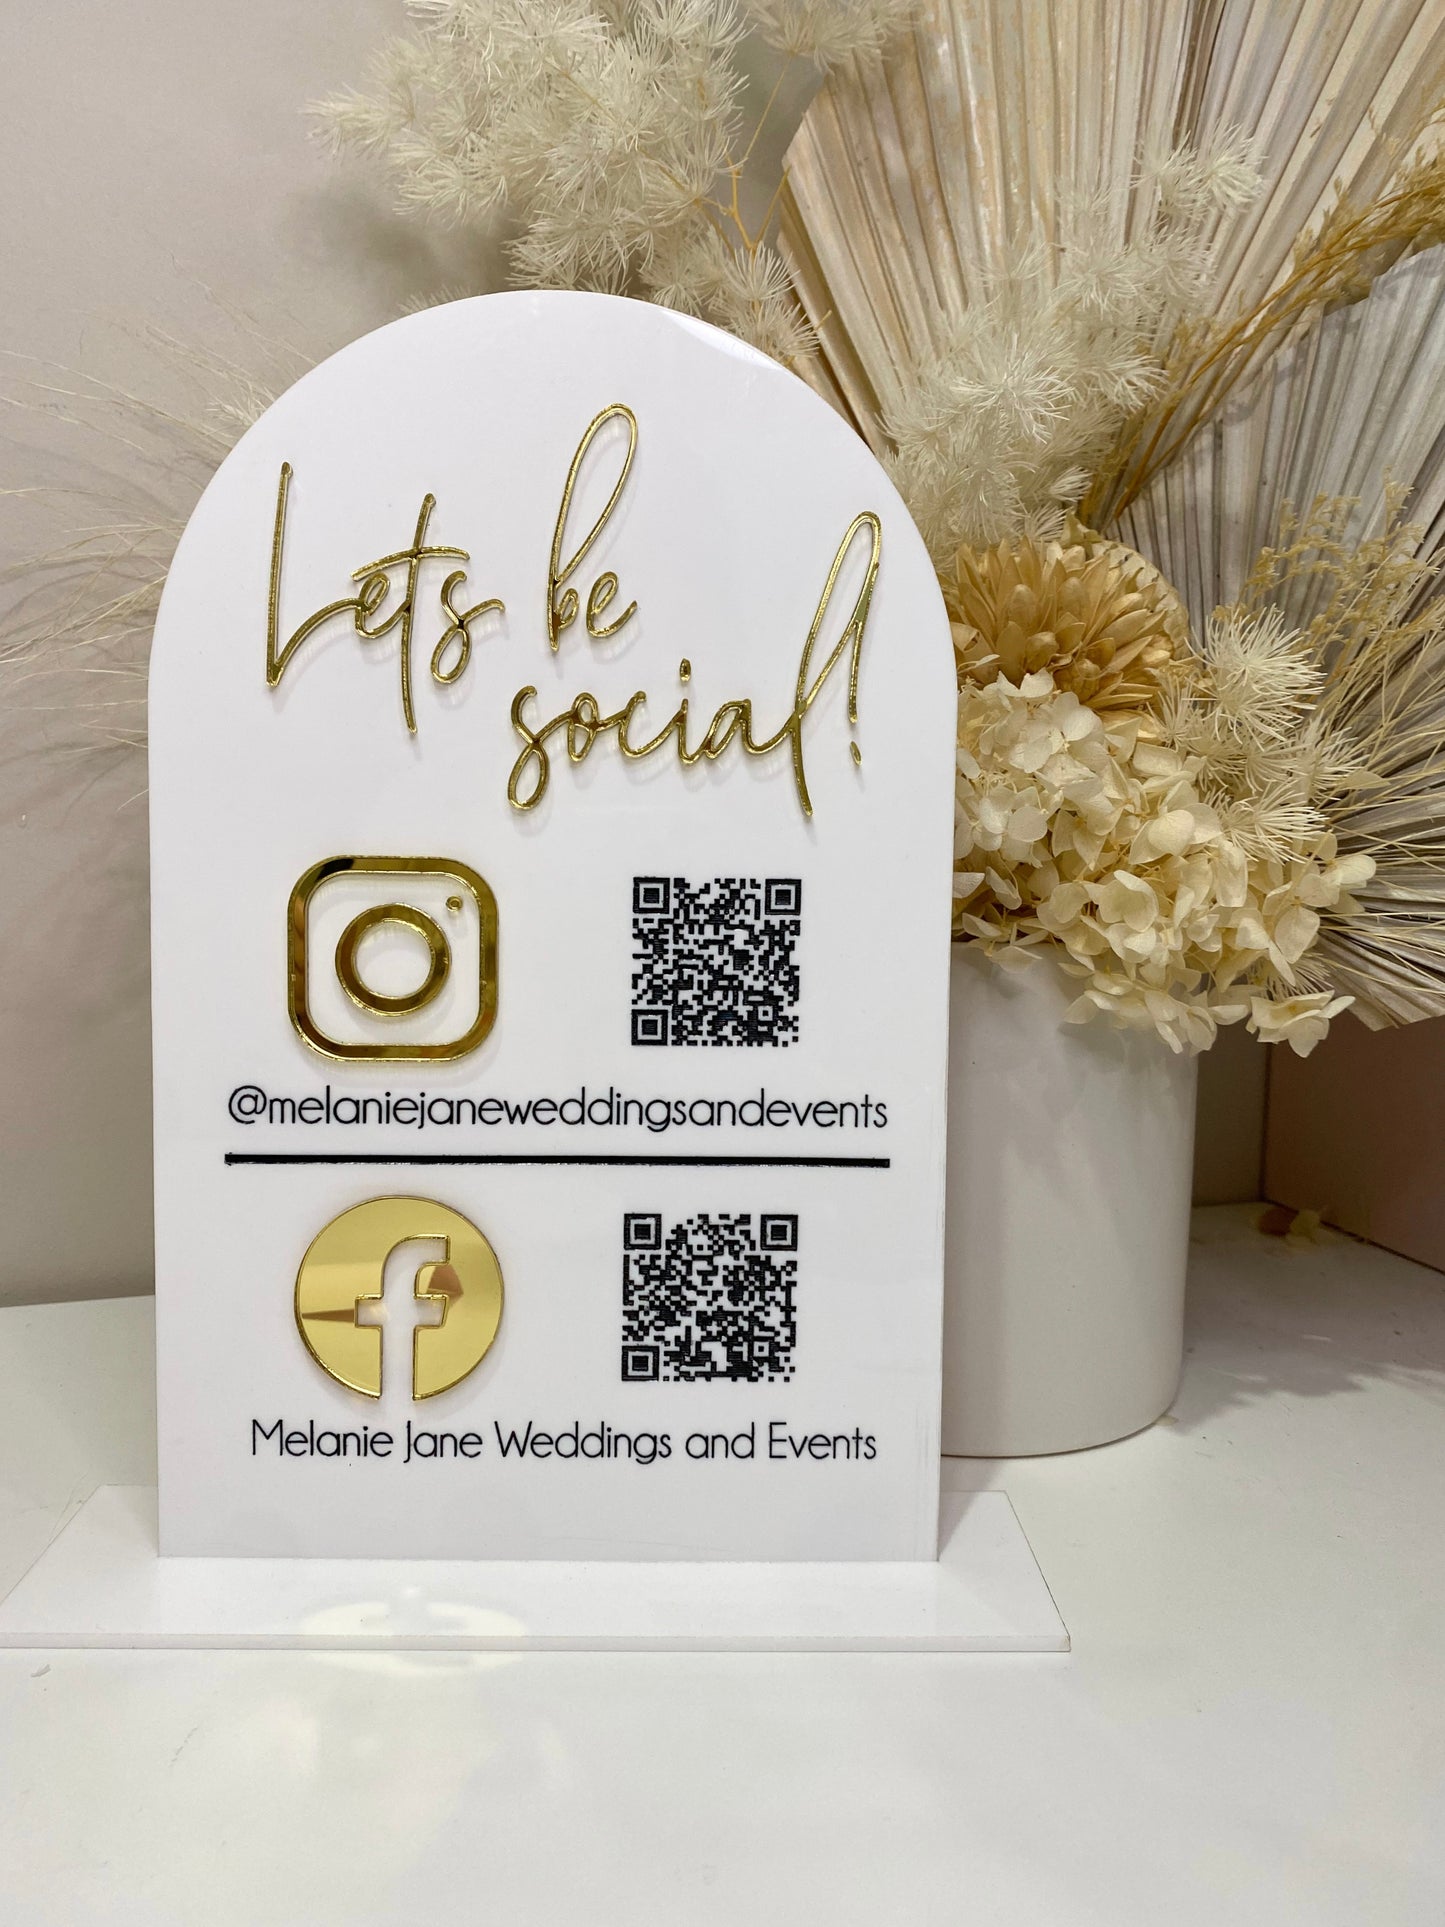 Acrylic 'Lets be Social' Business QR Code Social Media Signage